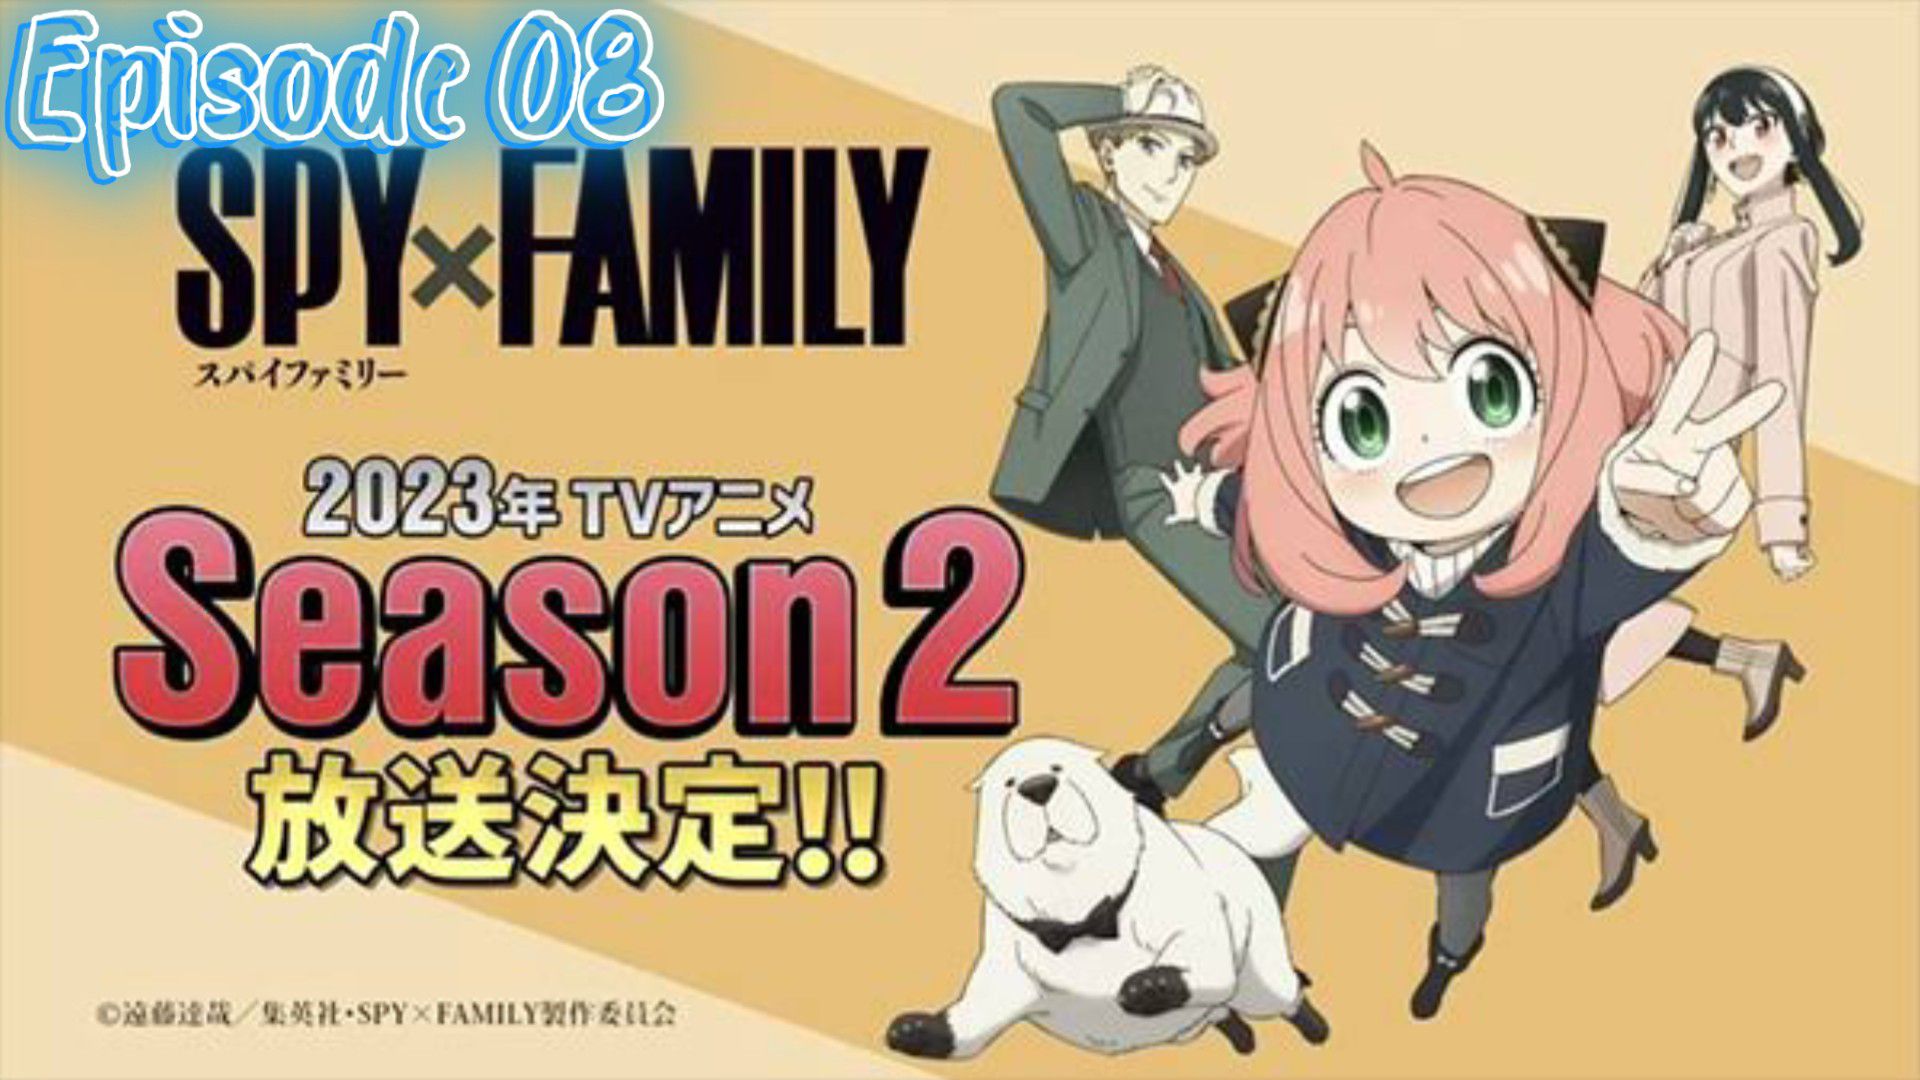 Spy x Family Anime to Get Official Filipino Dub - Anime Corner